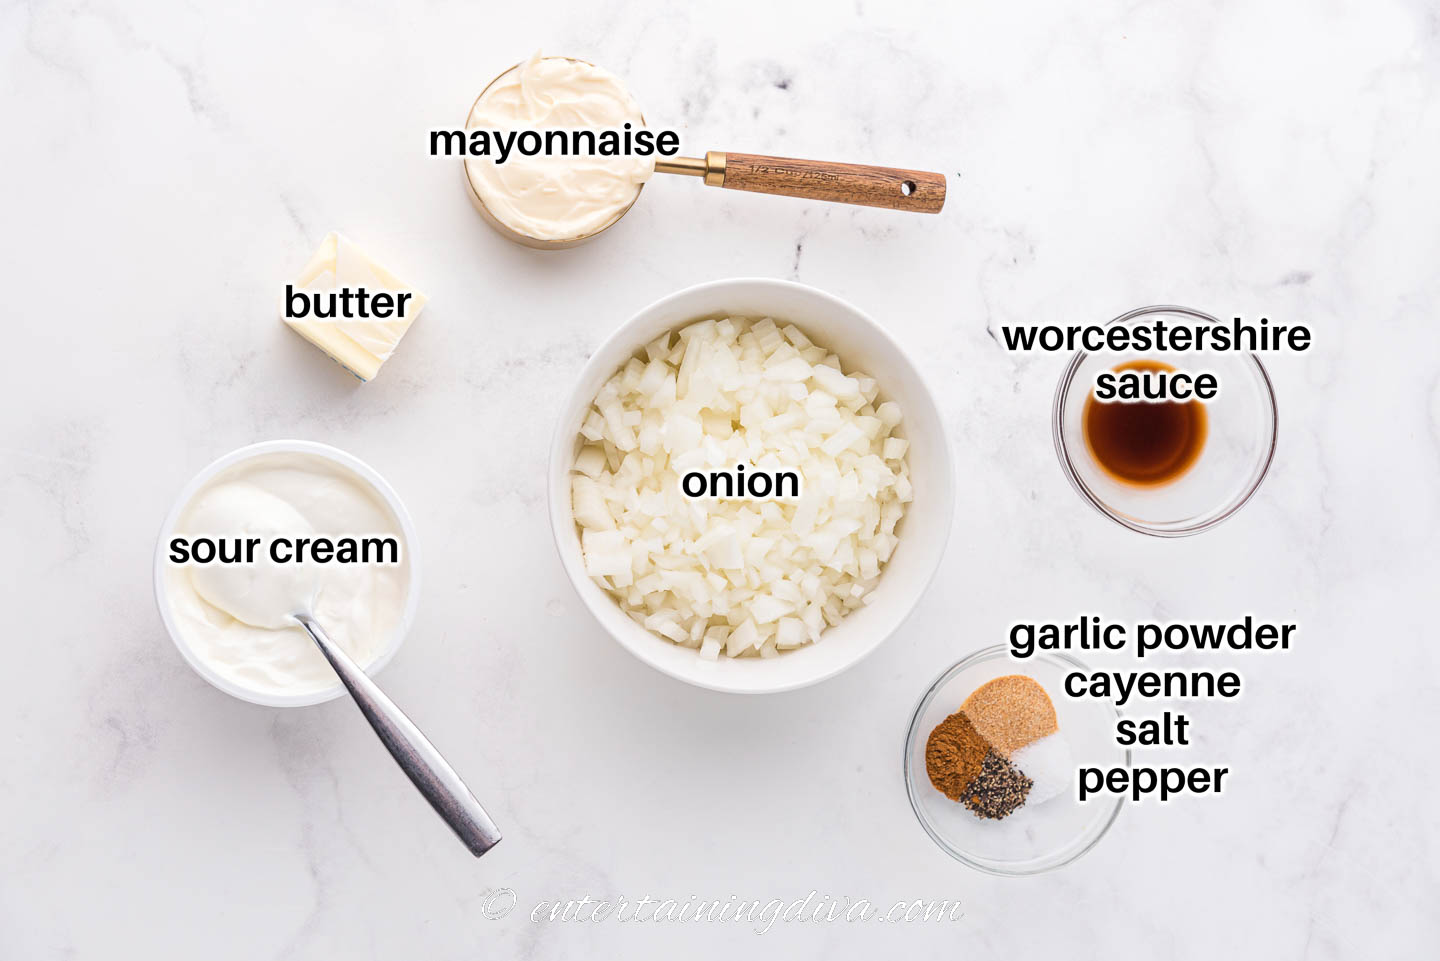 caramelized onion dip ingredients - onion, mayonnaise, butter, sour cream, worcestershire sauce, garlic powder, cayenne, salt, pepper